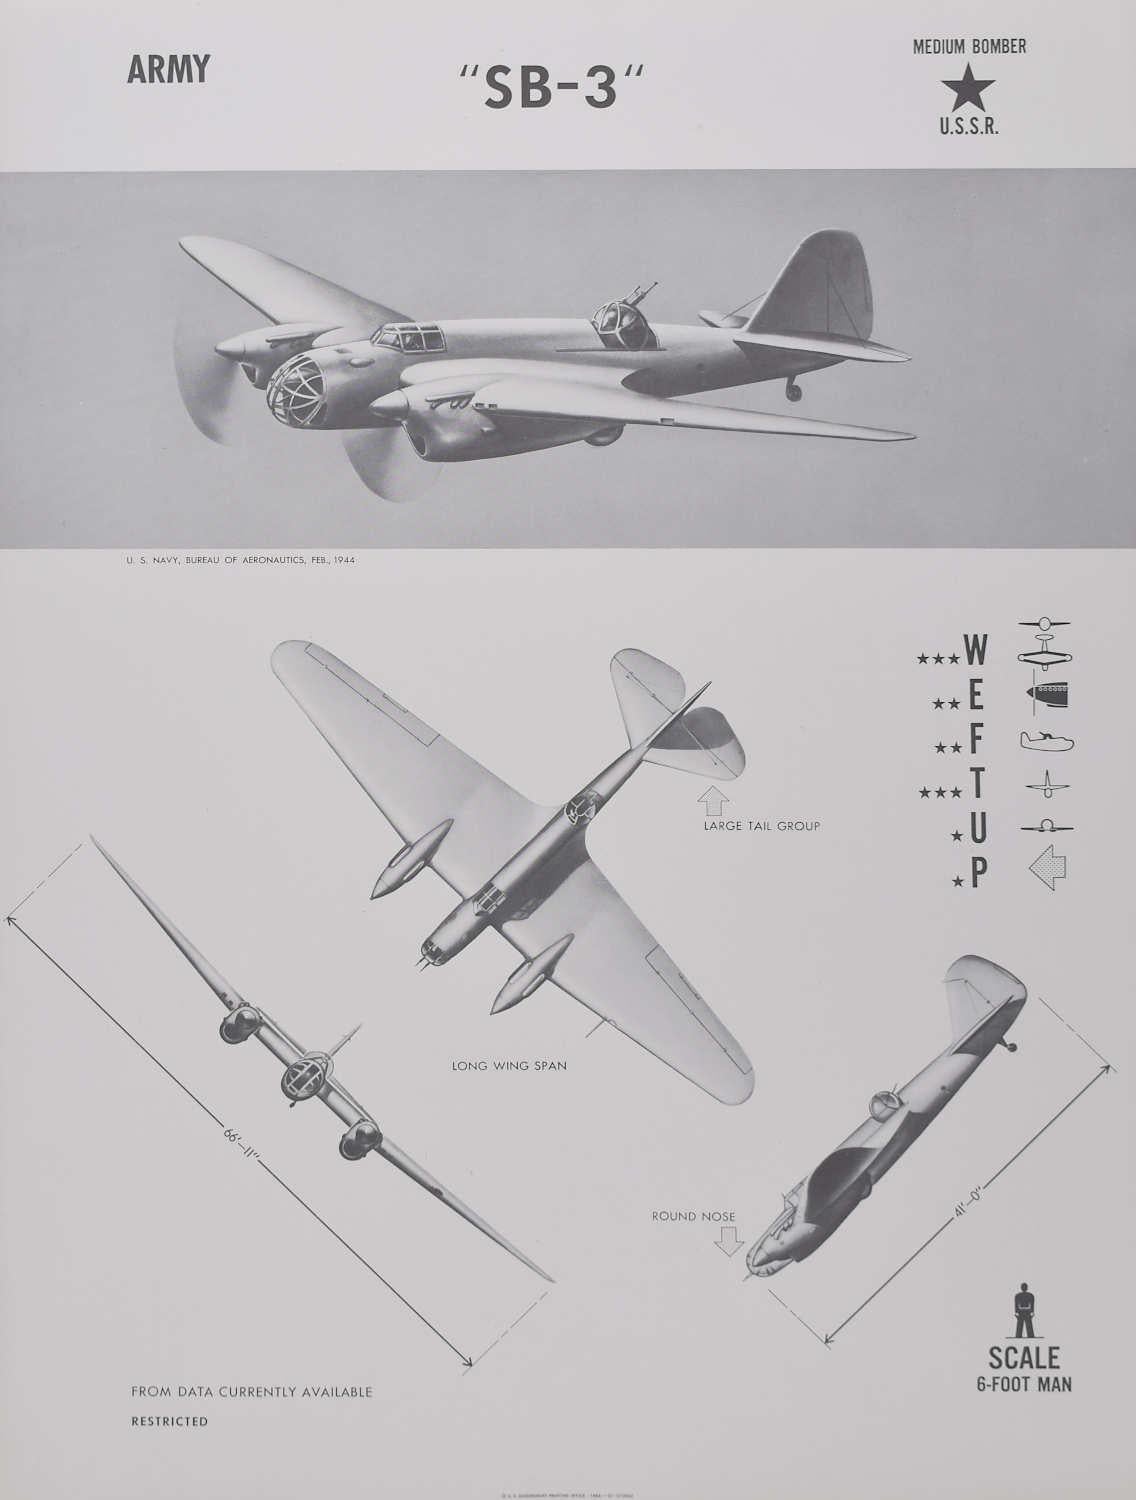 1944 "SB-3" Russian USSR medium bomber plane identification poster WW2 - Print by Unknown